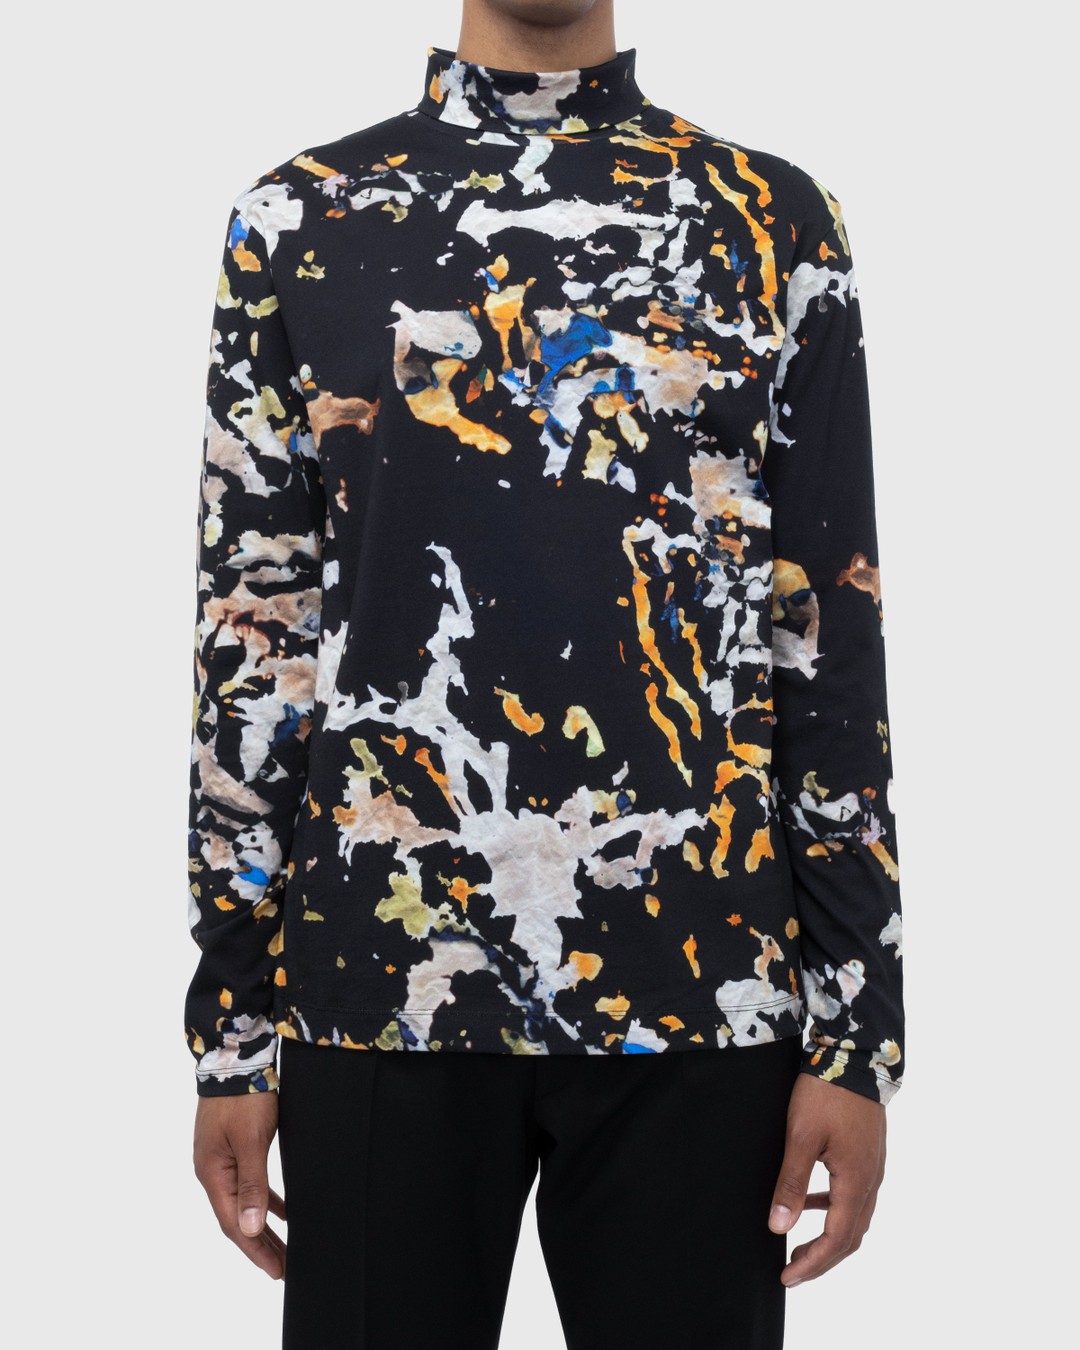 Dries van Noten – Heyzo Turtleneck Jersey Shirt Multi - Sweats - Multi - Image 3